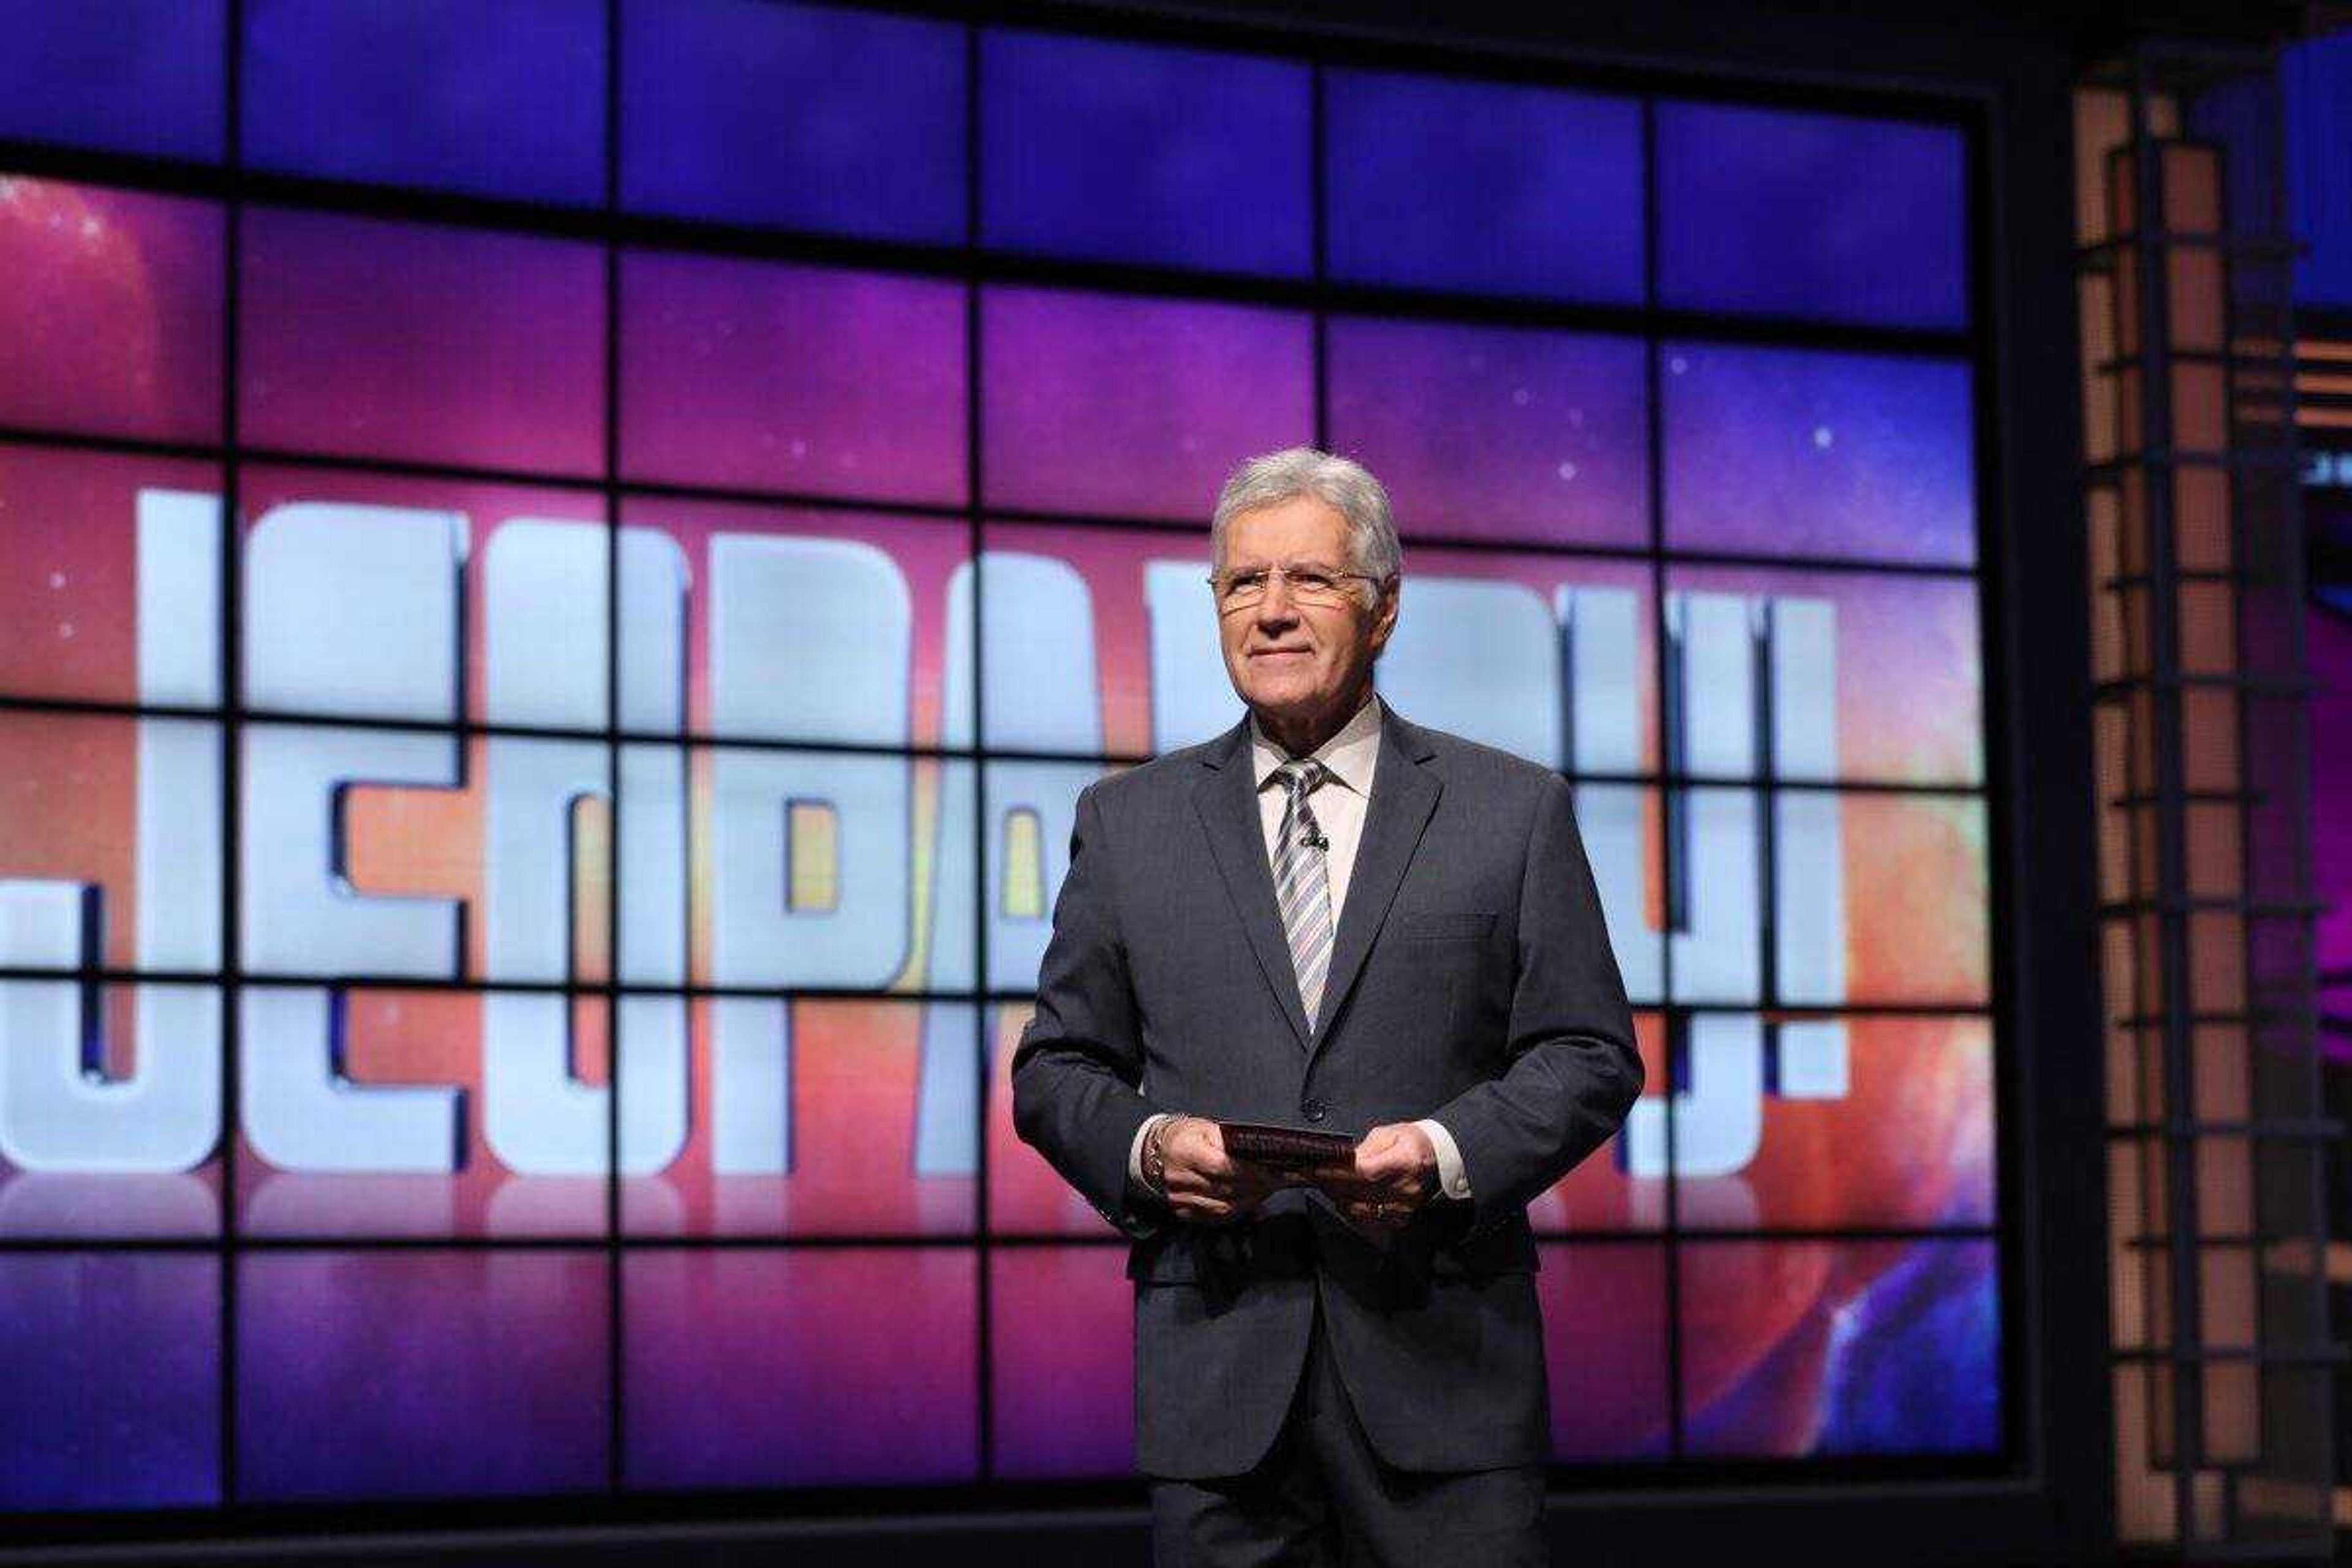 Jeopardy! Host Alex Trebek dead at 80: Gone but not forgotten